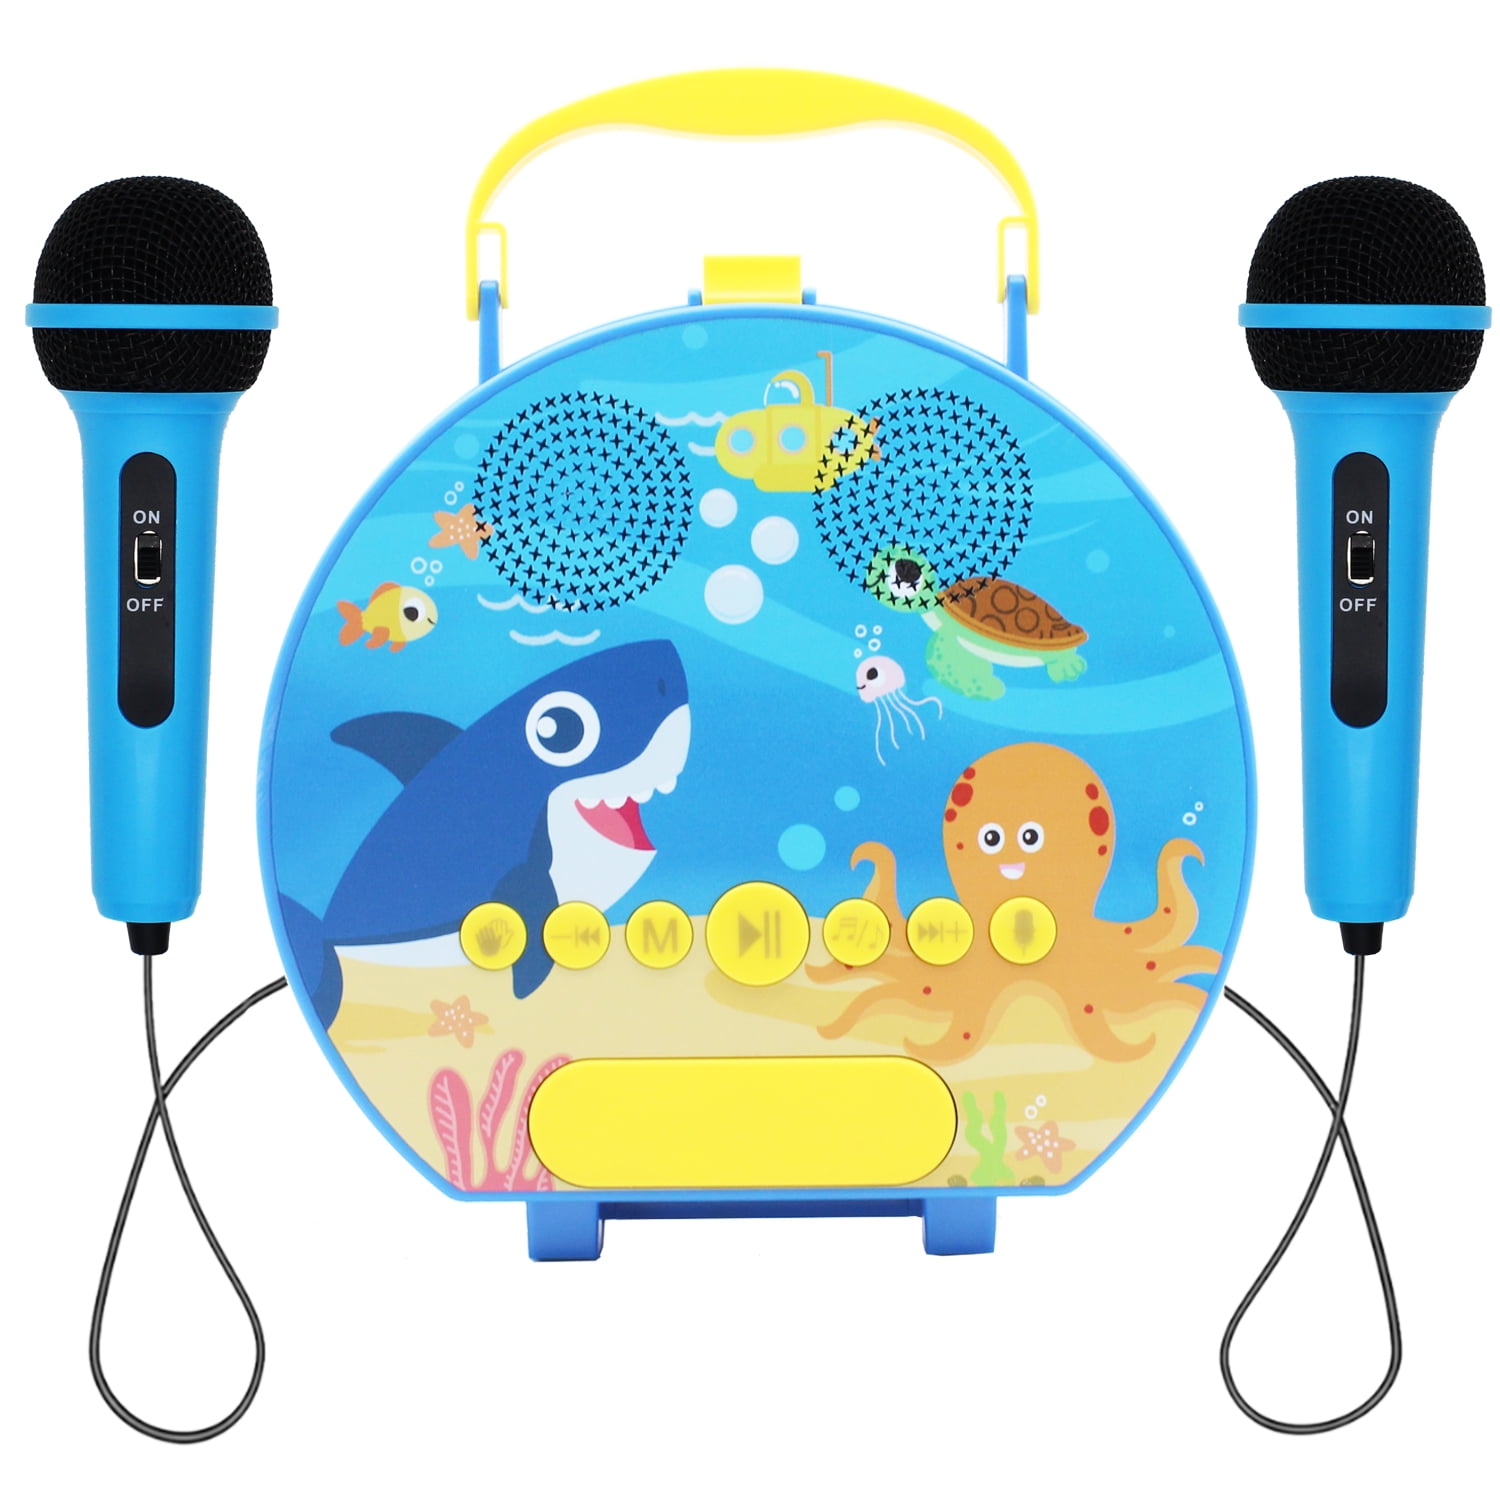 Kids karaoke machine with two microphones